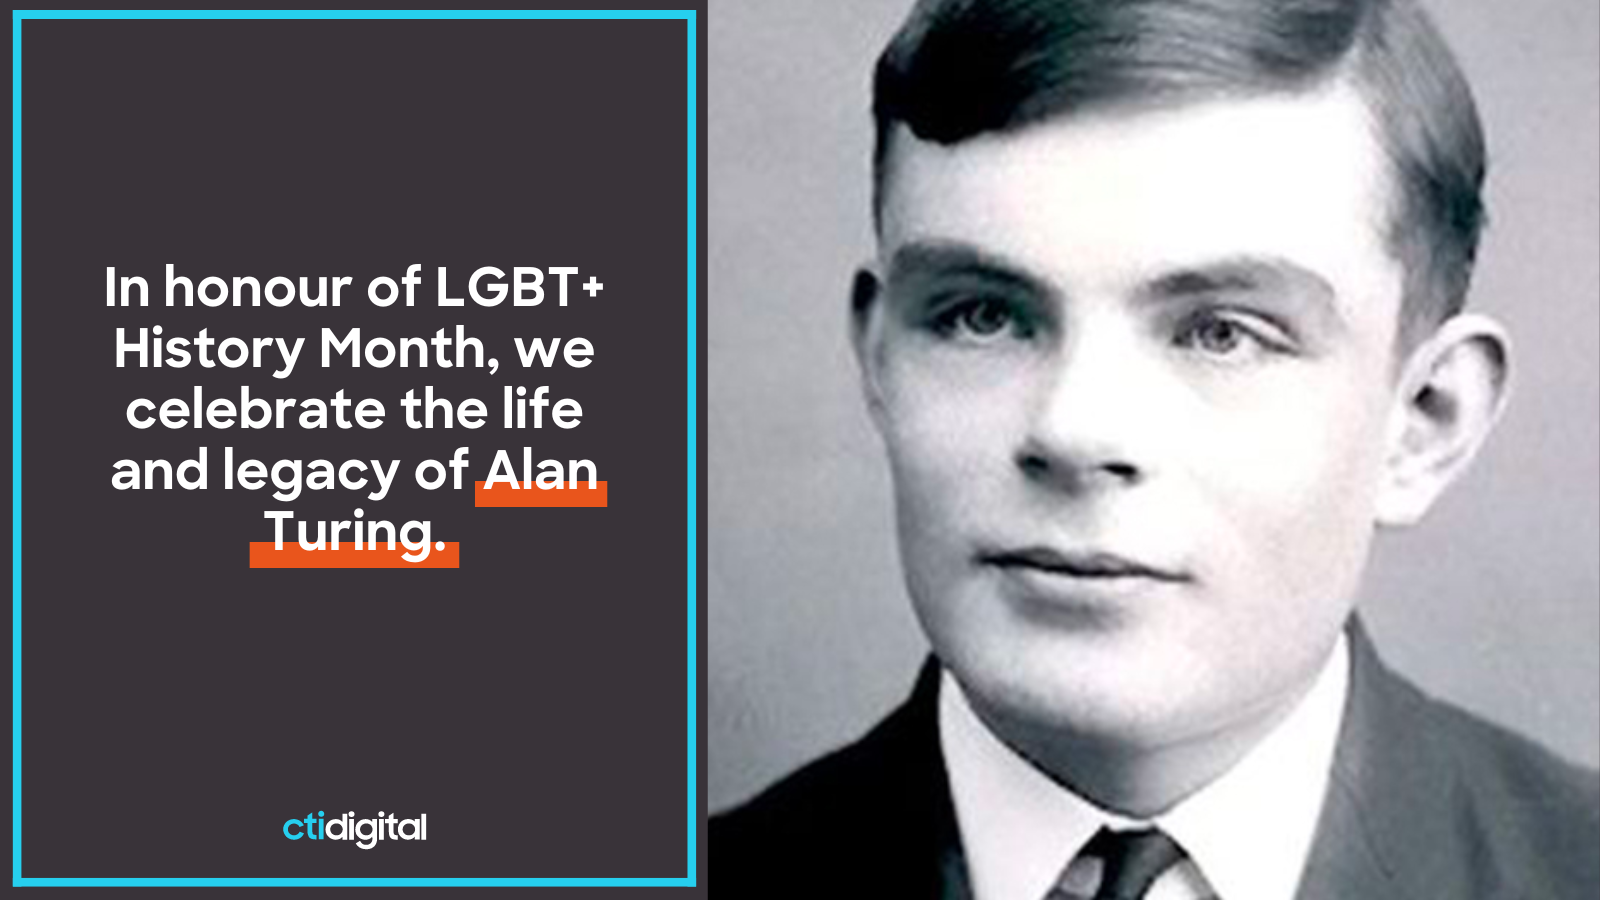 Celebrating Alan Turing this LGBT+ History Month